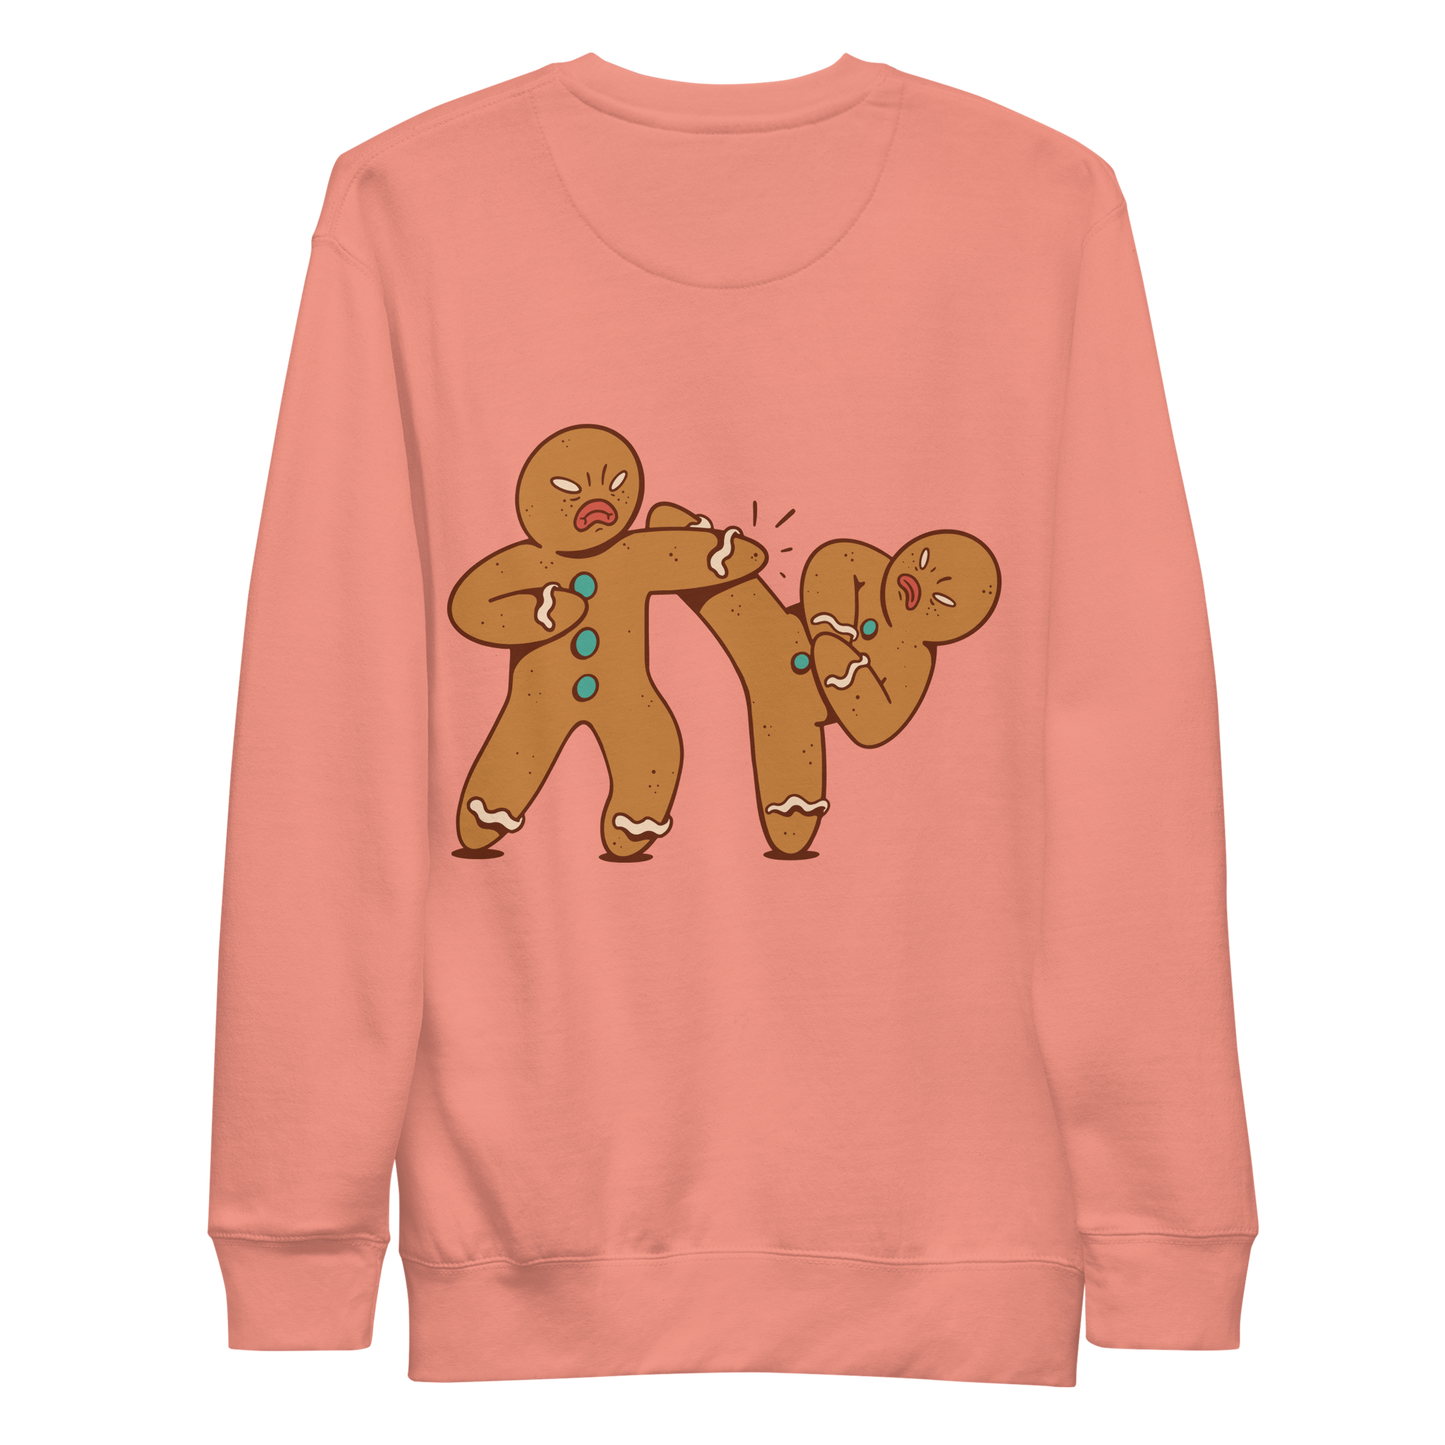 Gingerbread men fight | Unisex Premium Sweatshirt - F&B